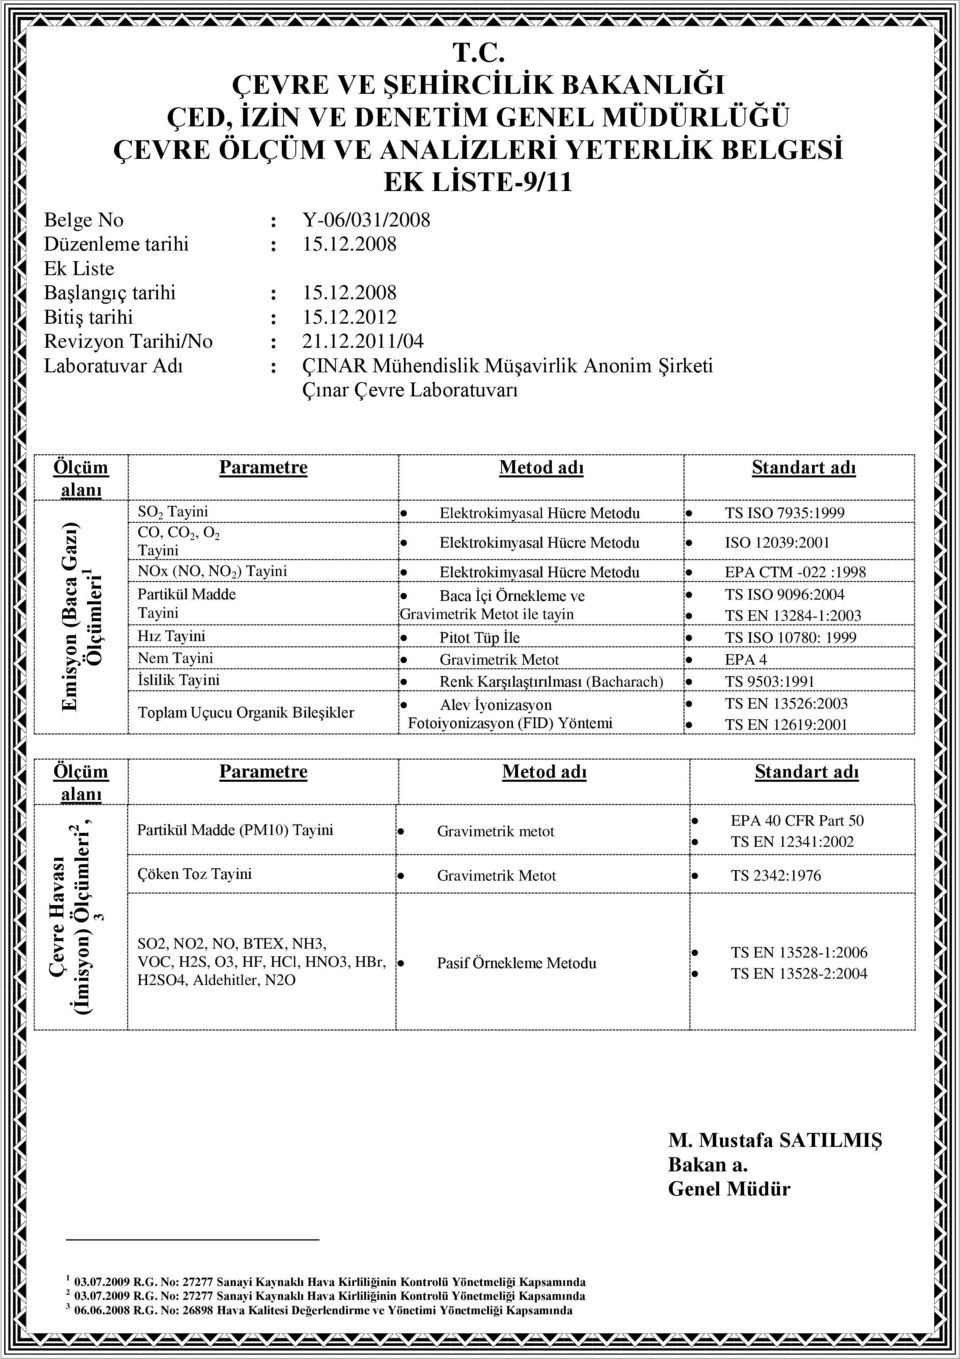 Baca Ġçi Örnekleme ve TS ISO 9096:2004 Gravimetrik Metot ile tayin TS EN 1284-1:200 Hız Pitot Tüp Ġle TS ISO 10780: 1999 Nem Gravimetrik Metot EPA 4 Ġslilik Renk KarĢılaĢtırılması (Bacharach) TS